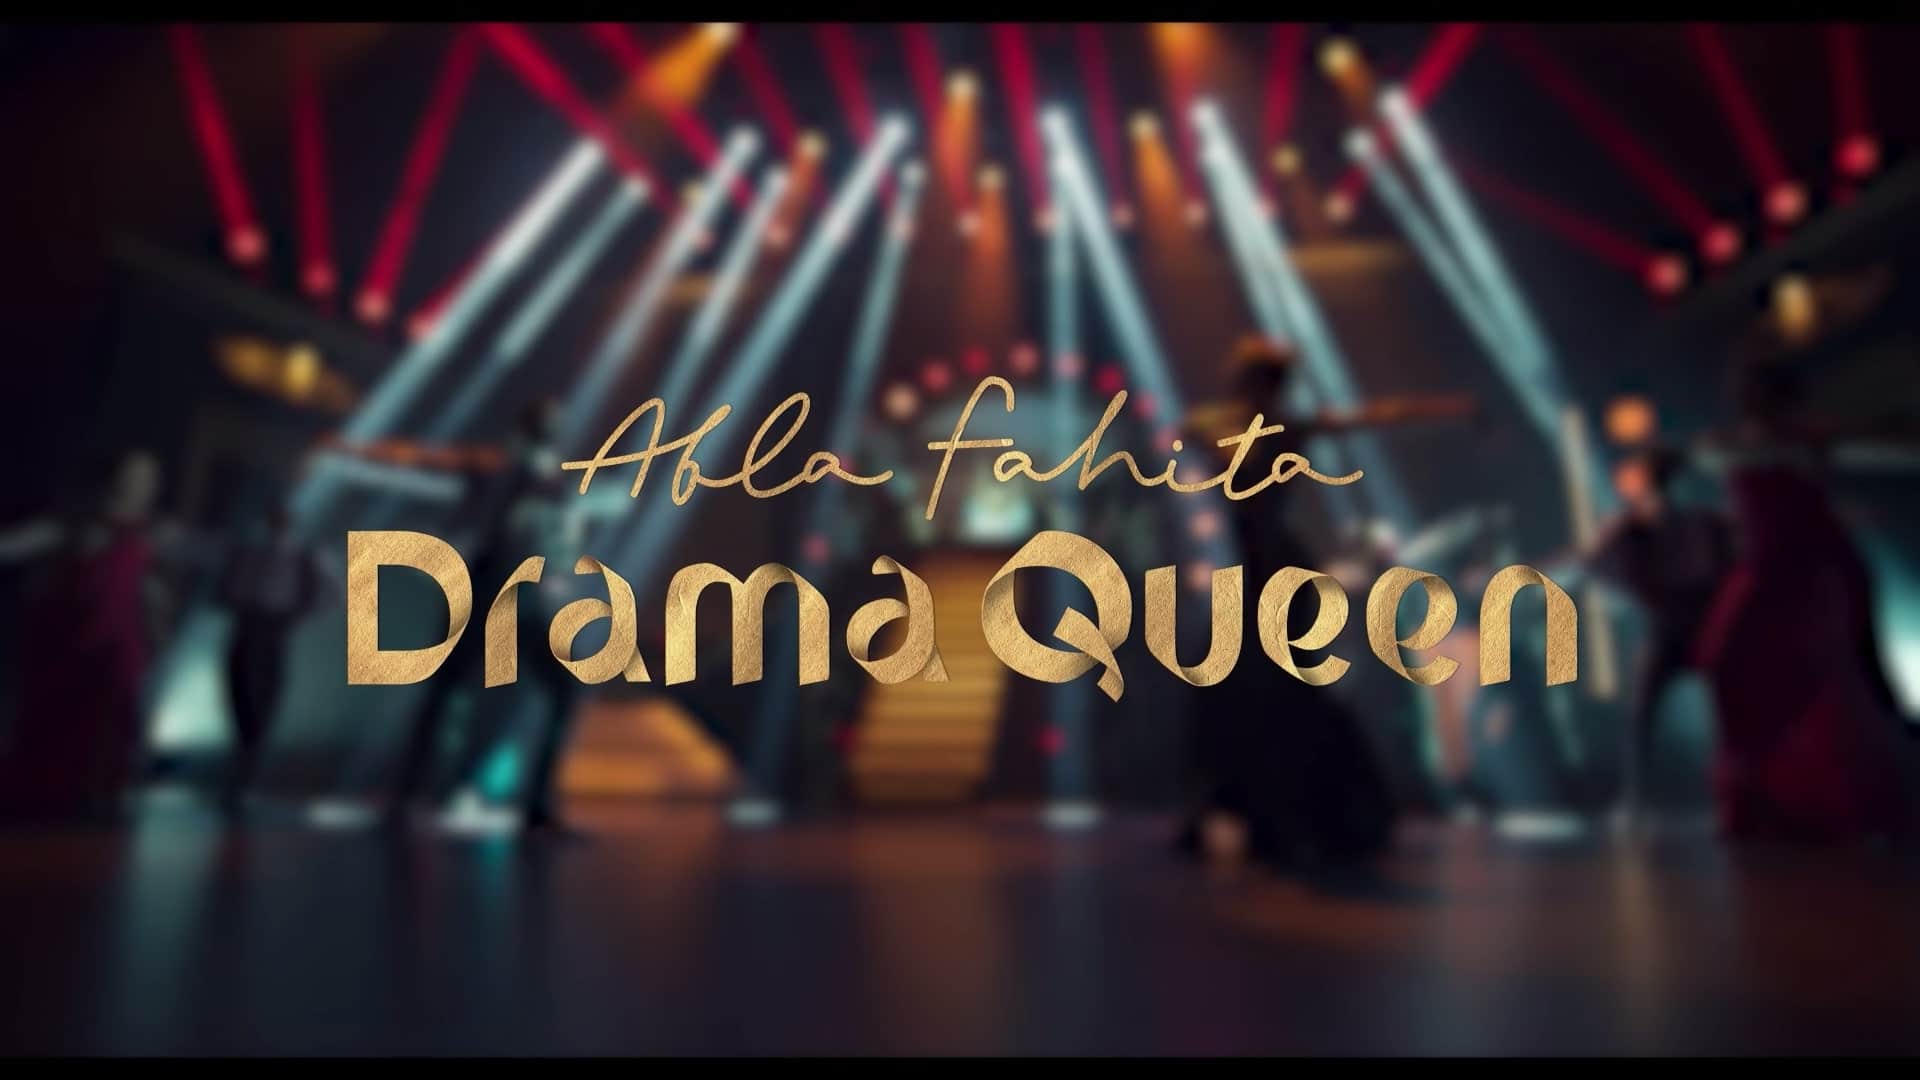 Abla Fahita Drama Queen Trailer Netflix, Netflix Comedy Series, Netflix Drama Series, Coming to Netflix in March 2021